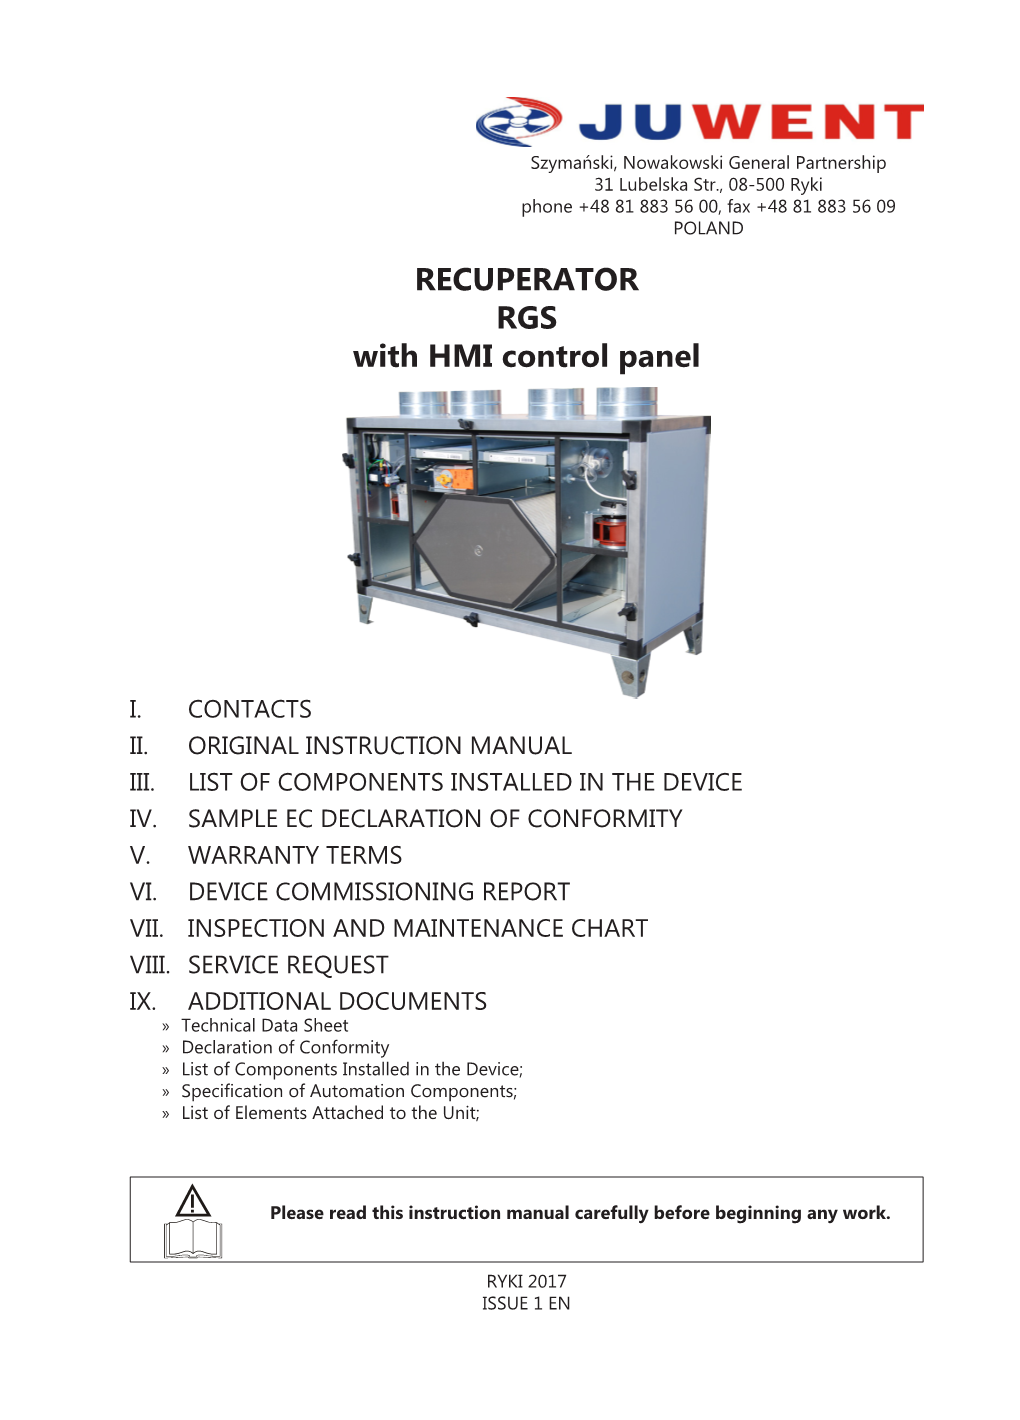 RECUPERATOR RGS with HMI Control Panel